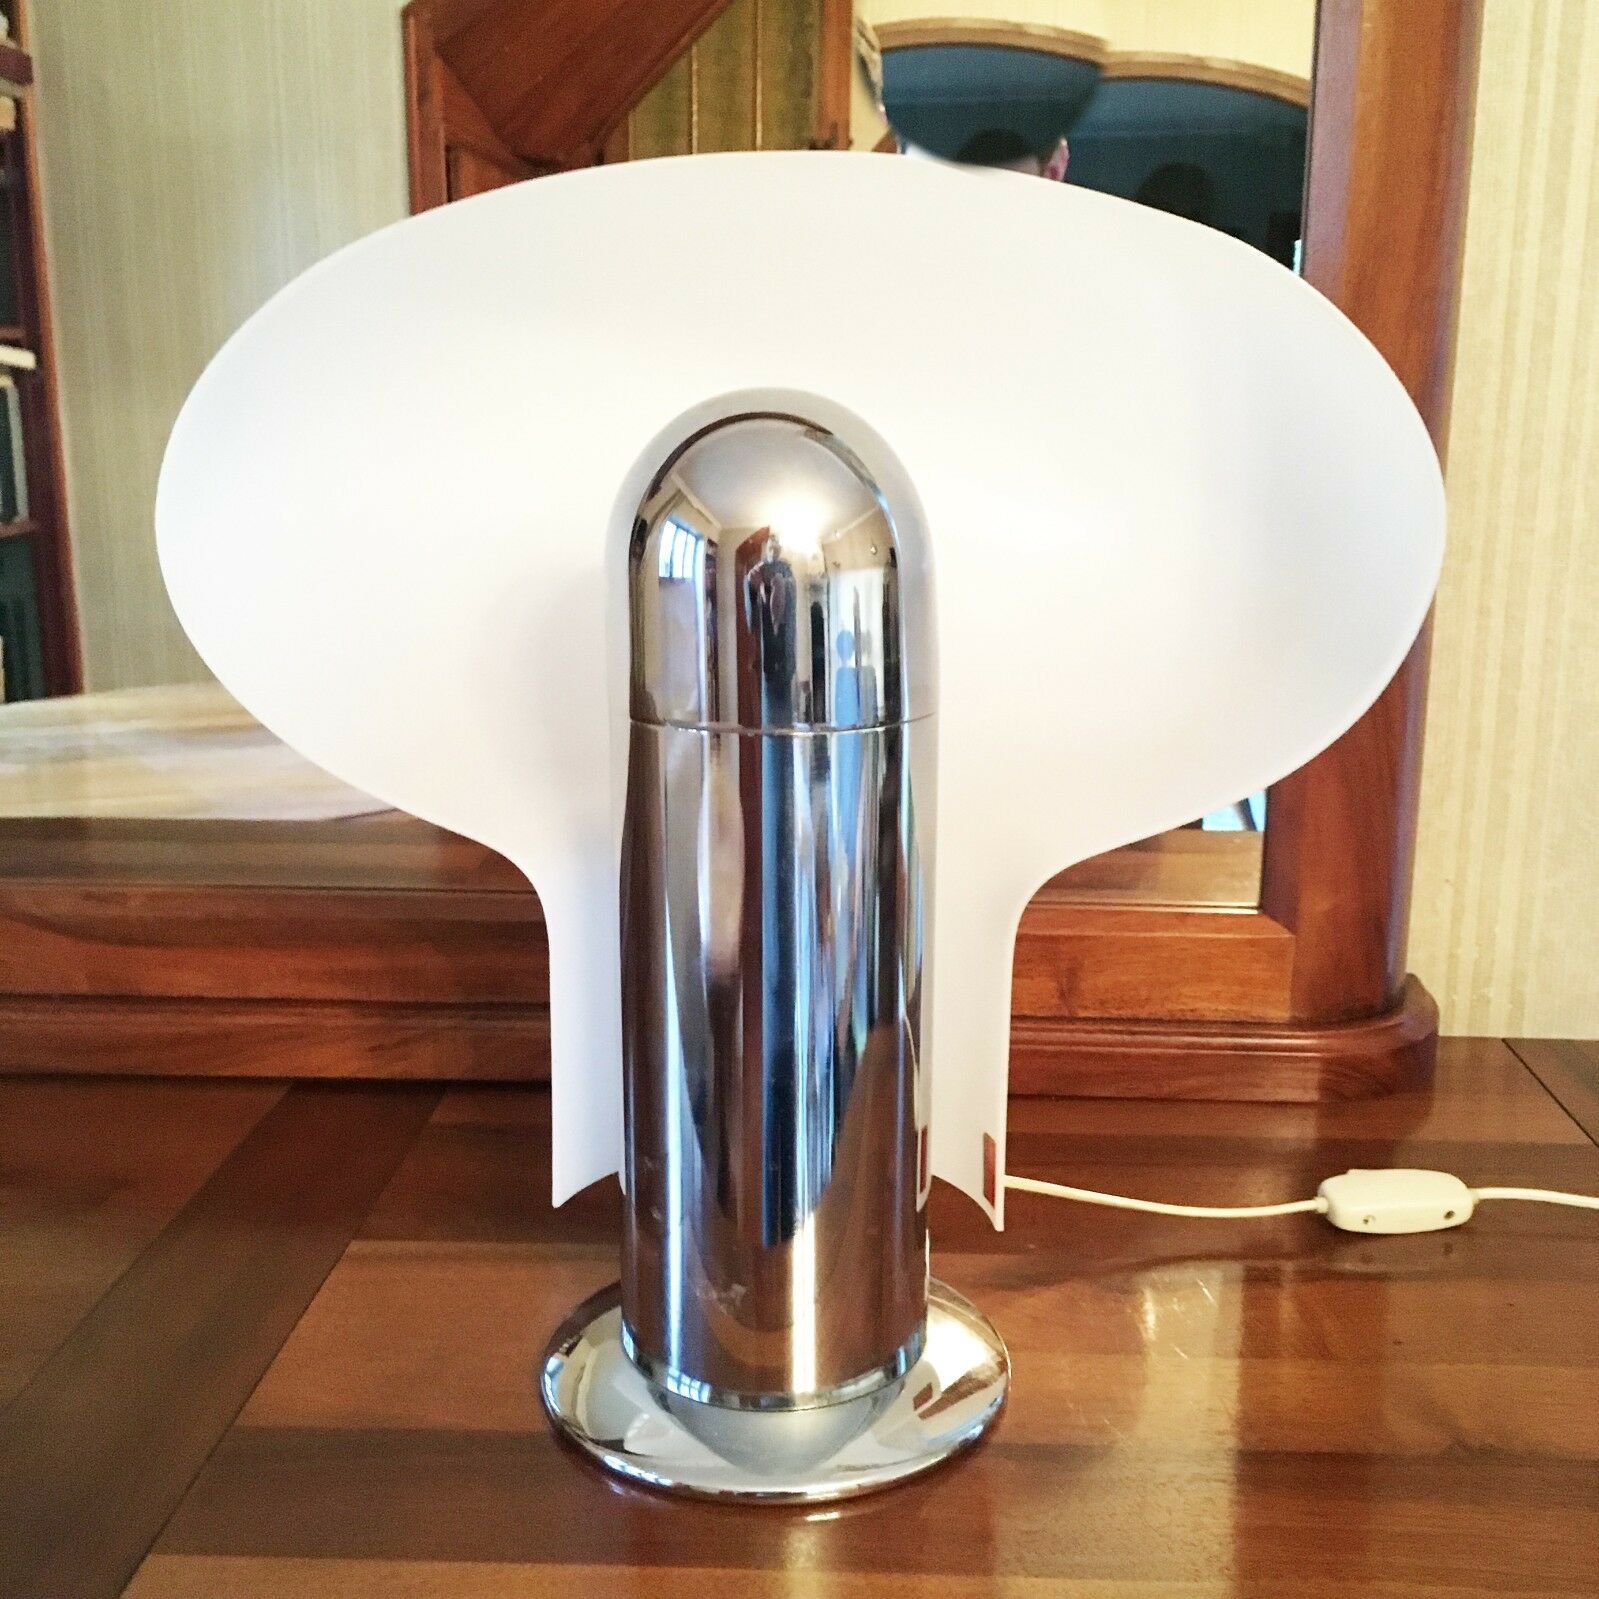 Rare "Leuke" table lamp designed by Tognon Stiln - Mindscapade ]|[